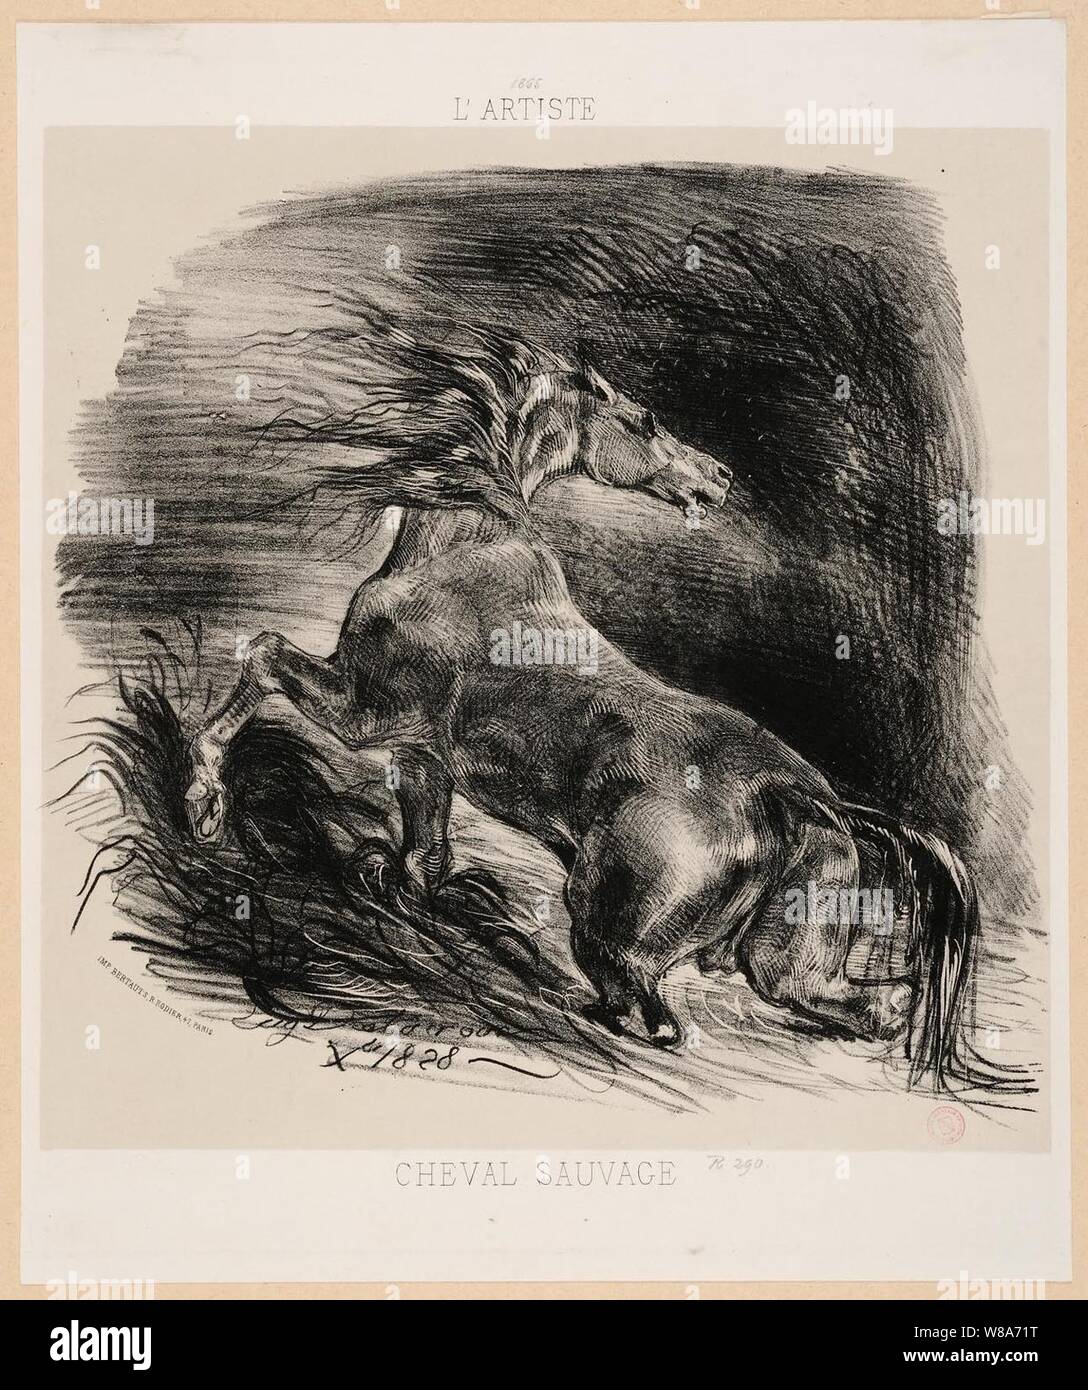 Delacroix Cheval sauvage 1828. Stock Photo